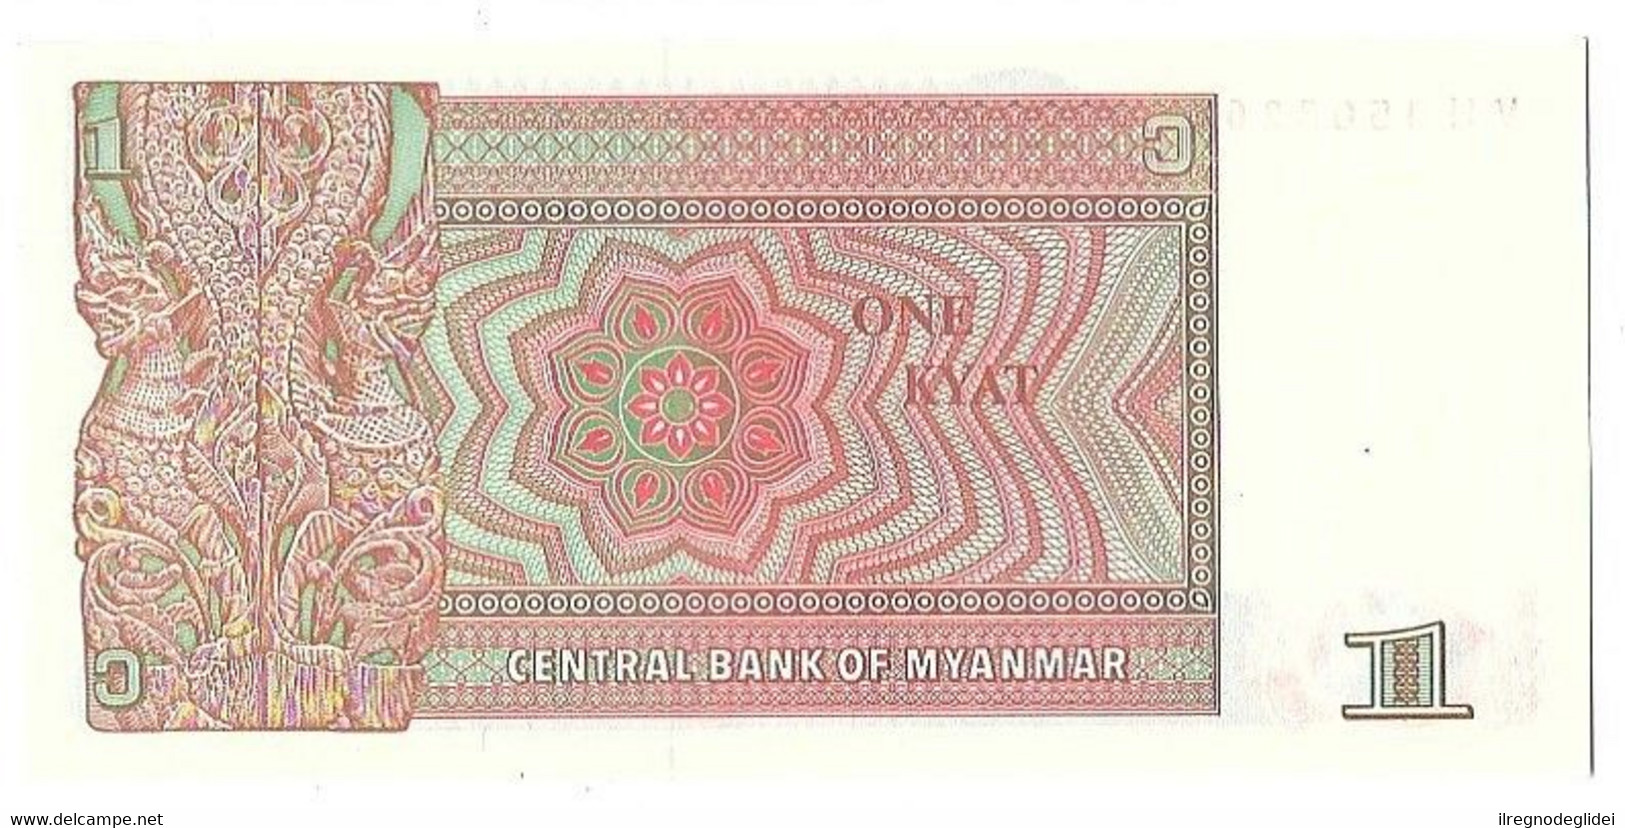 MYANMAR BIRMANIA - 1 ONE KYAT - WYSIWYG  - FIOR DI STAMPA - N° SERIALE VH1503262 - CARTAMONETA - PAPER MONEY - Myanmar